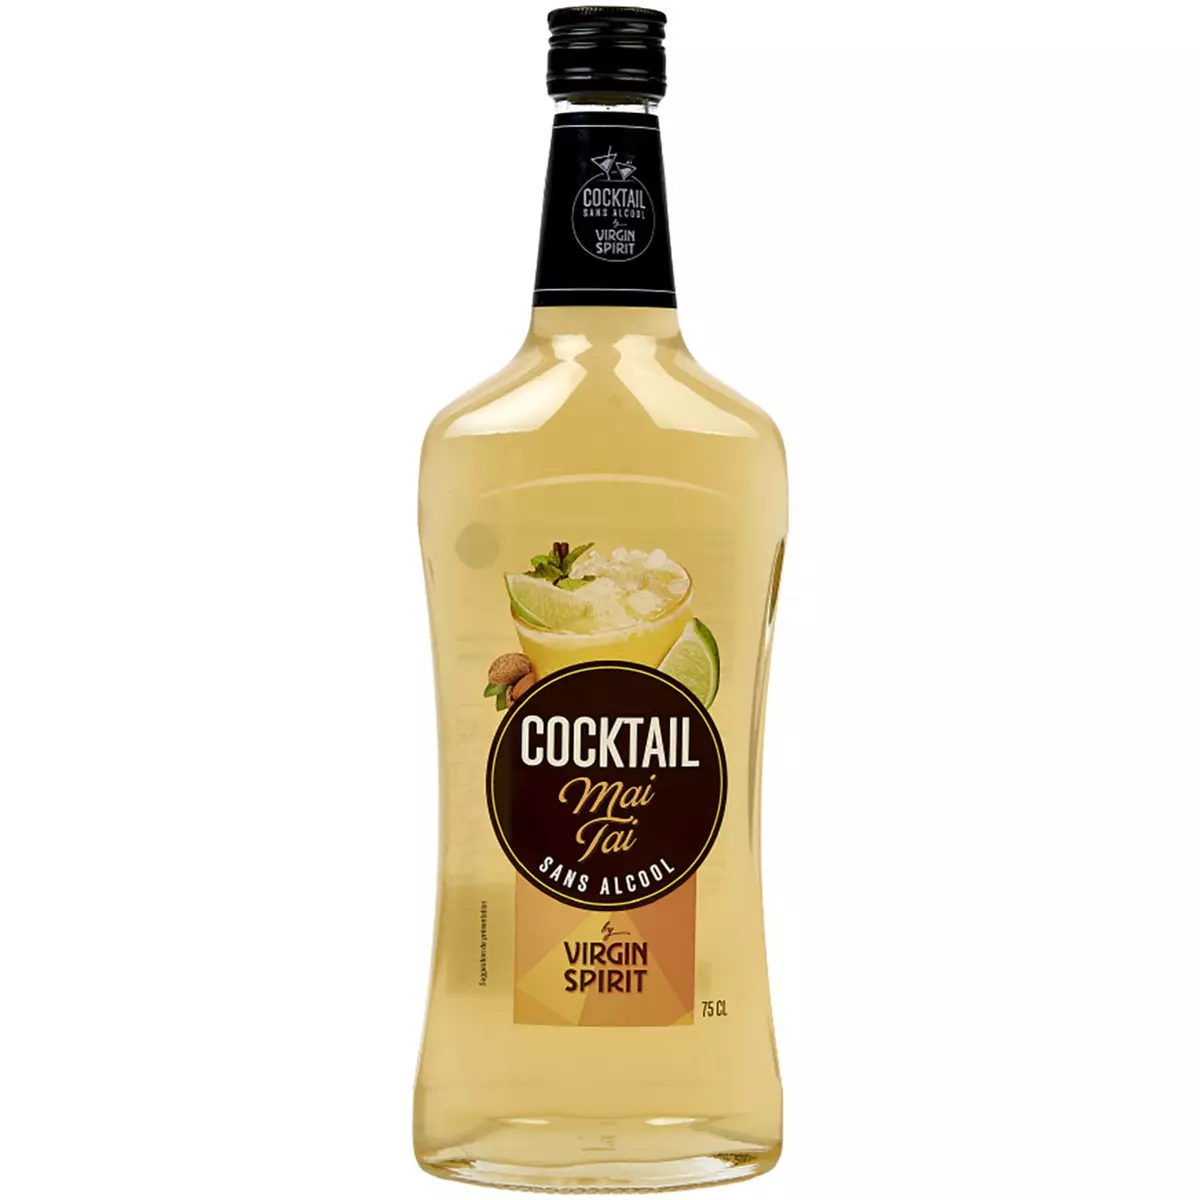 VIRGIN SPIRIT Cocktail sans alcool 75cl